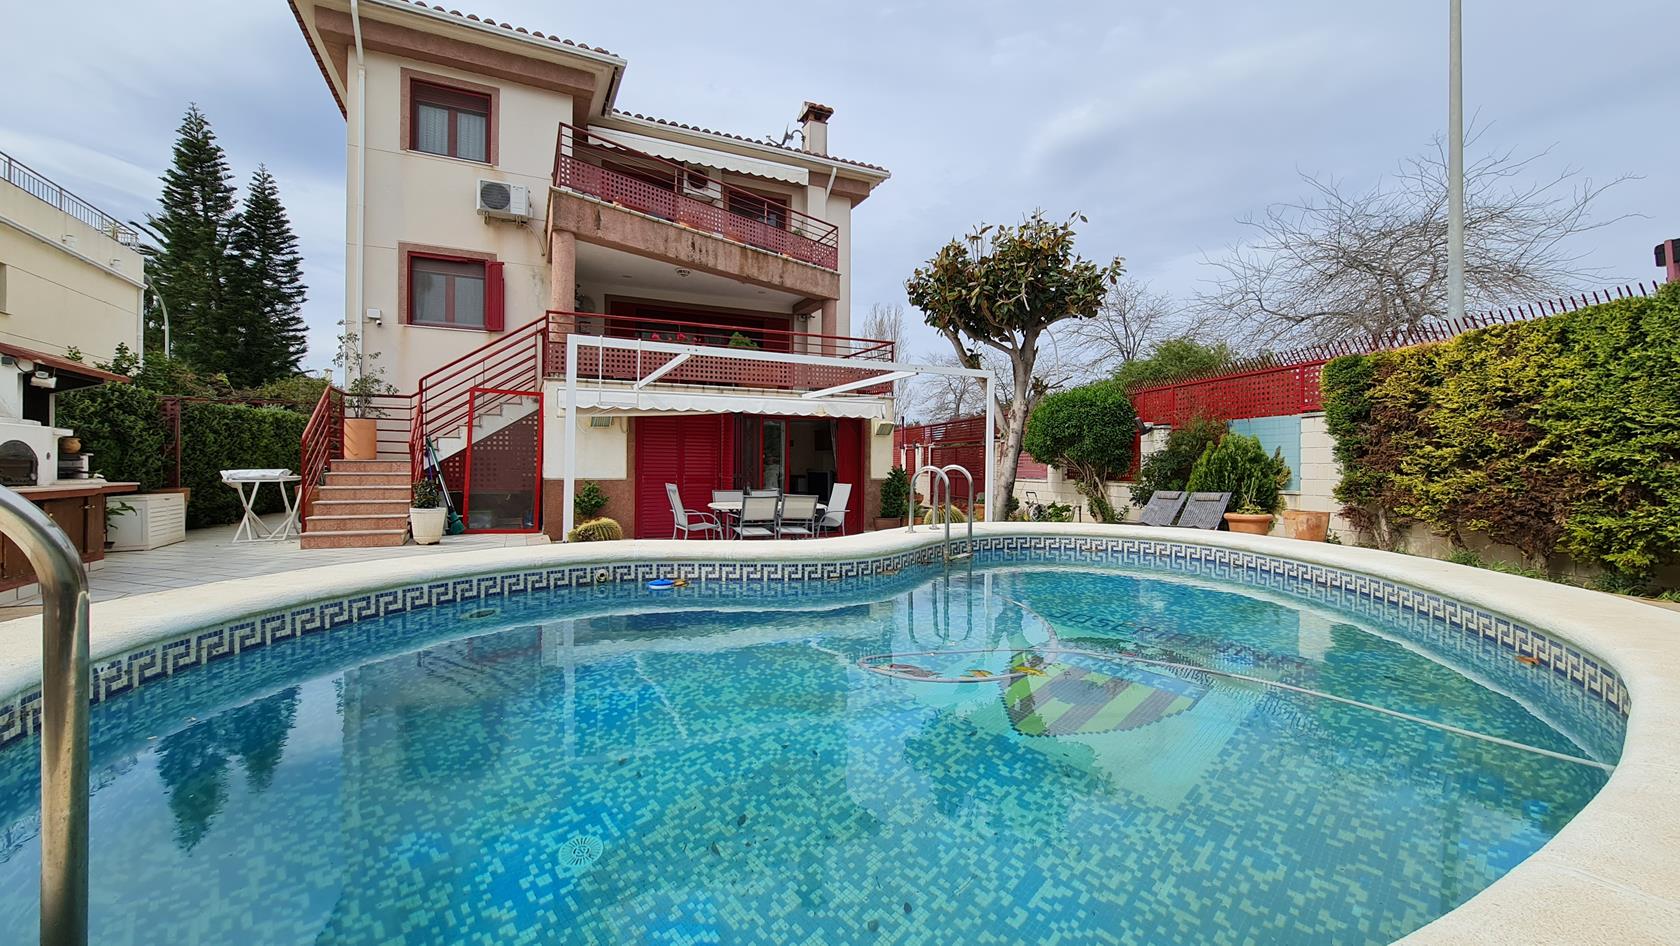 Fantastic detached villa with pool, garden, garage.